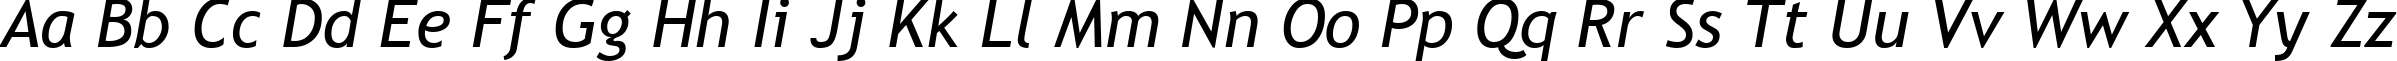 Пример написания английского алфавита шрифтом Trebuchet MS Italic